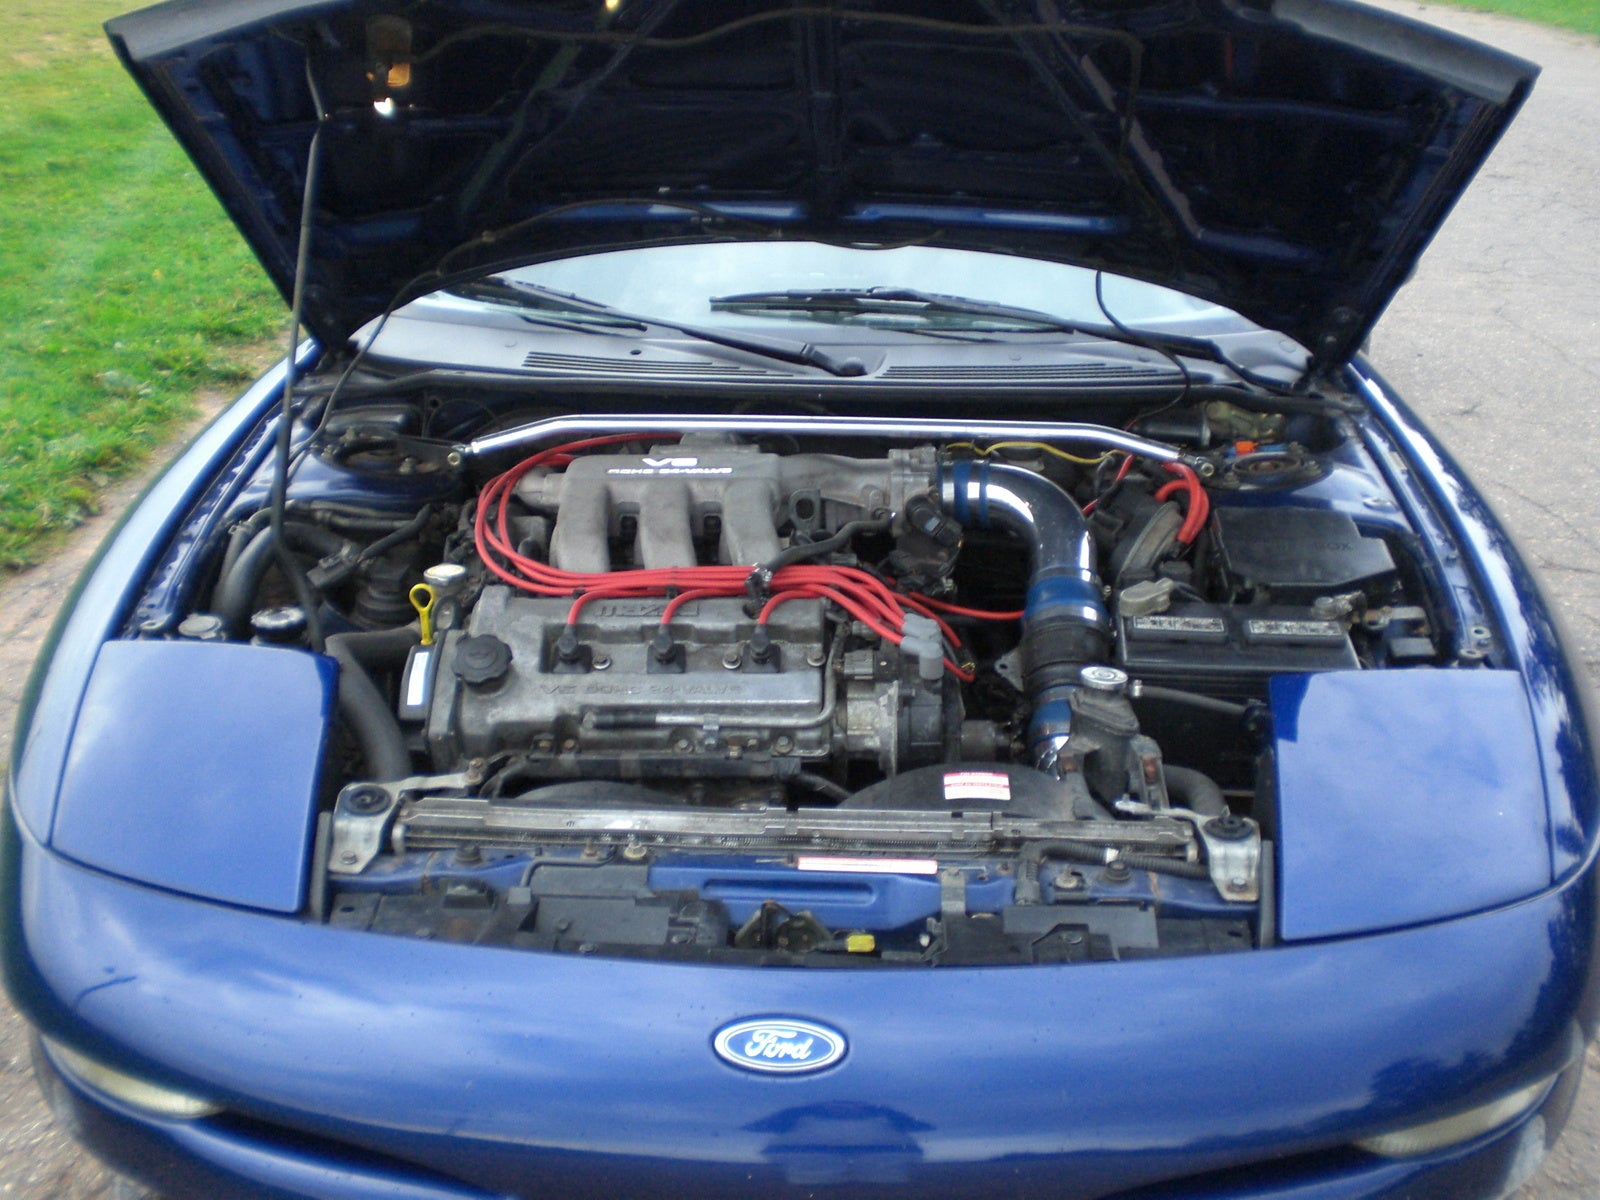 1994 Ford probe engine swap #1